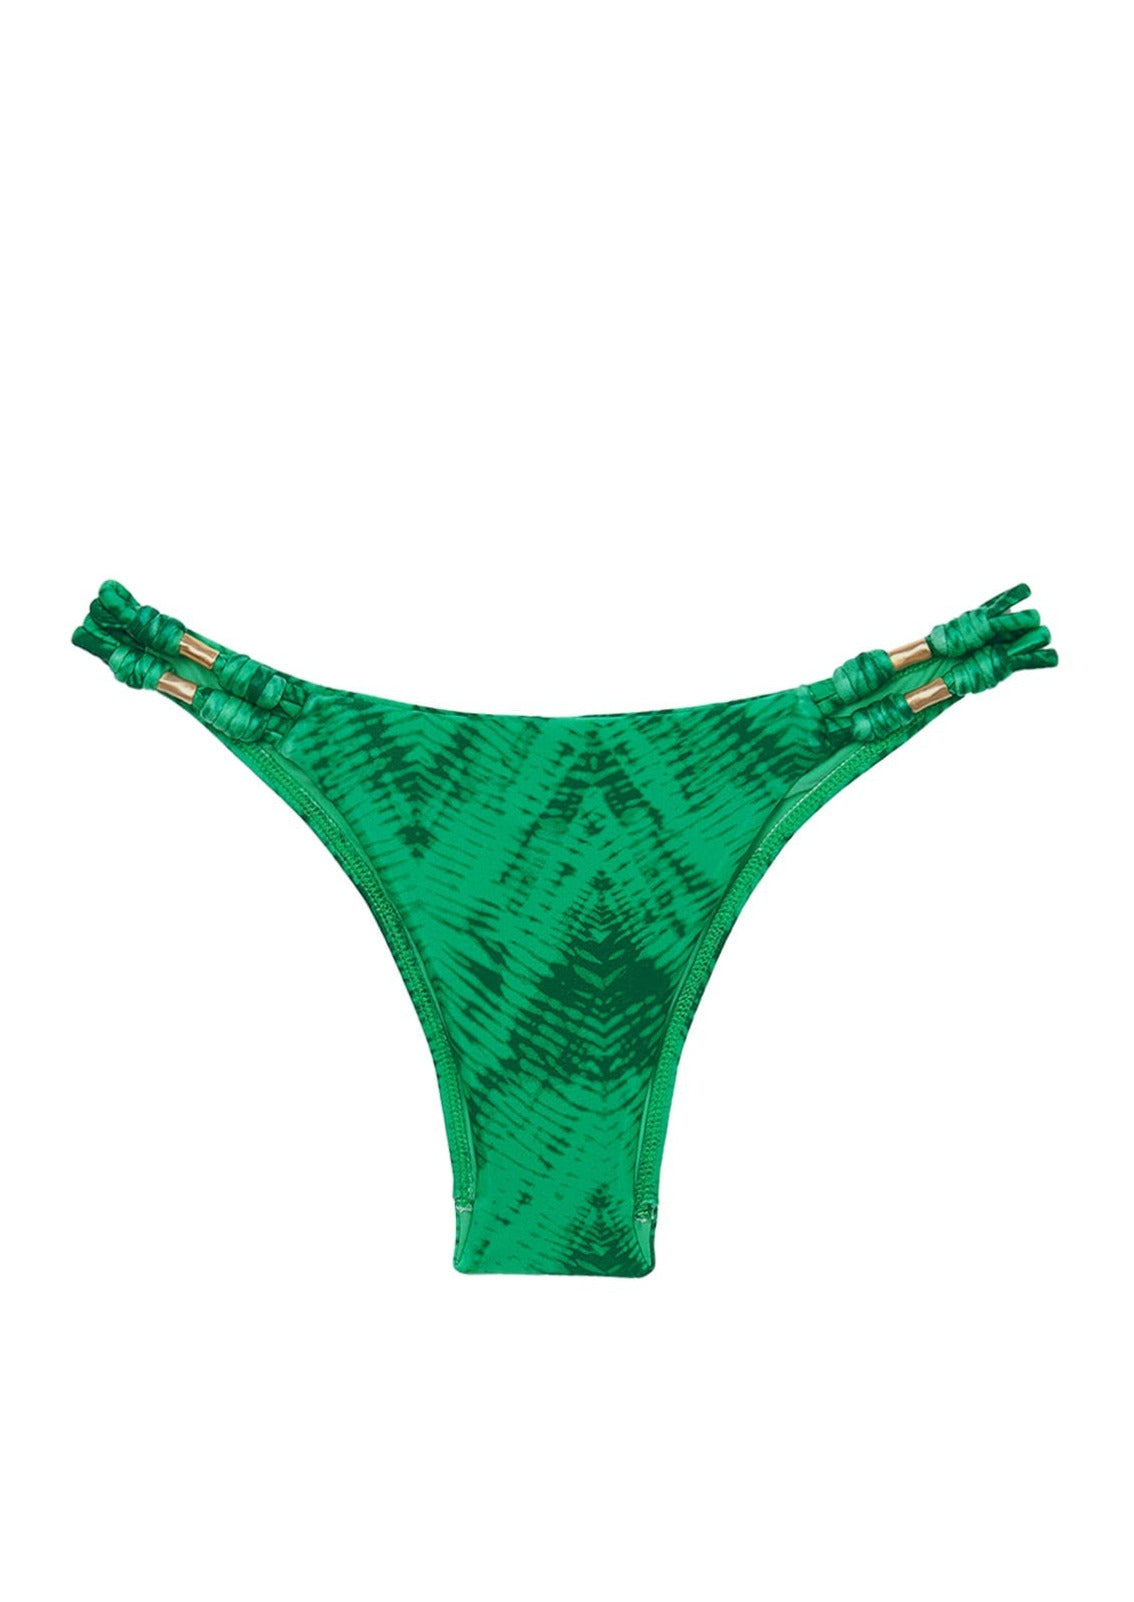 Vix Tamale Cactus Jaque Full Bikini Bottom